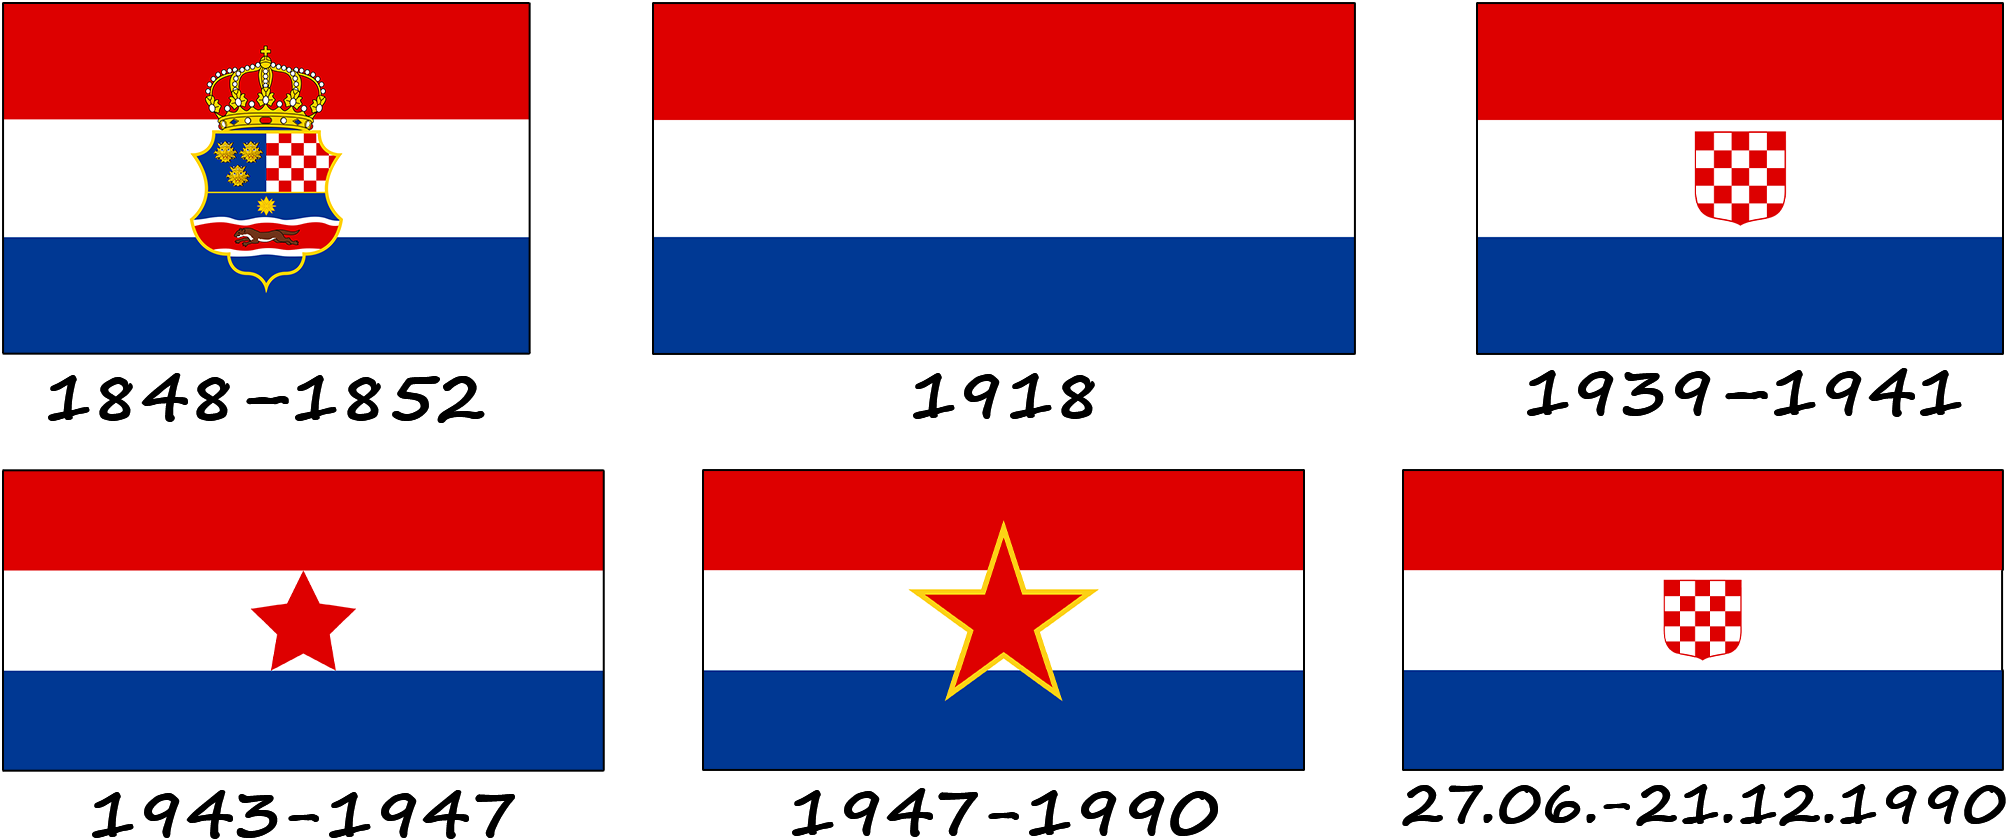 Histoire du drapeau croate